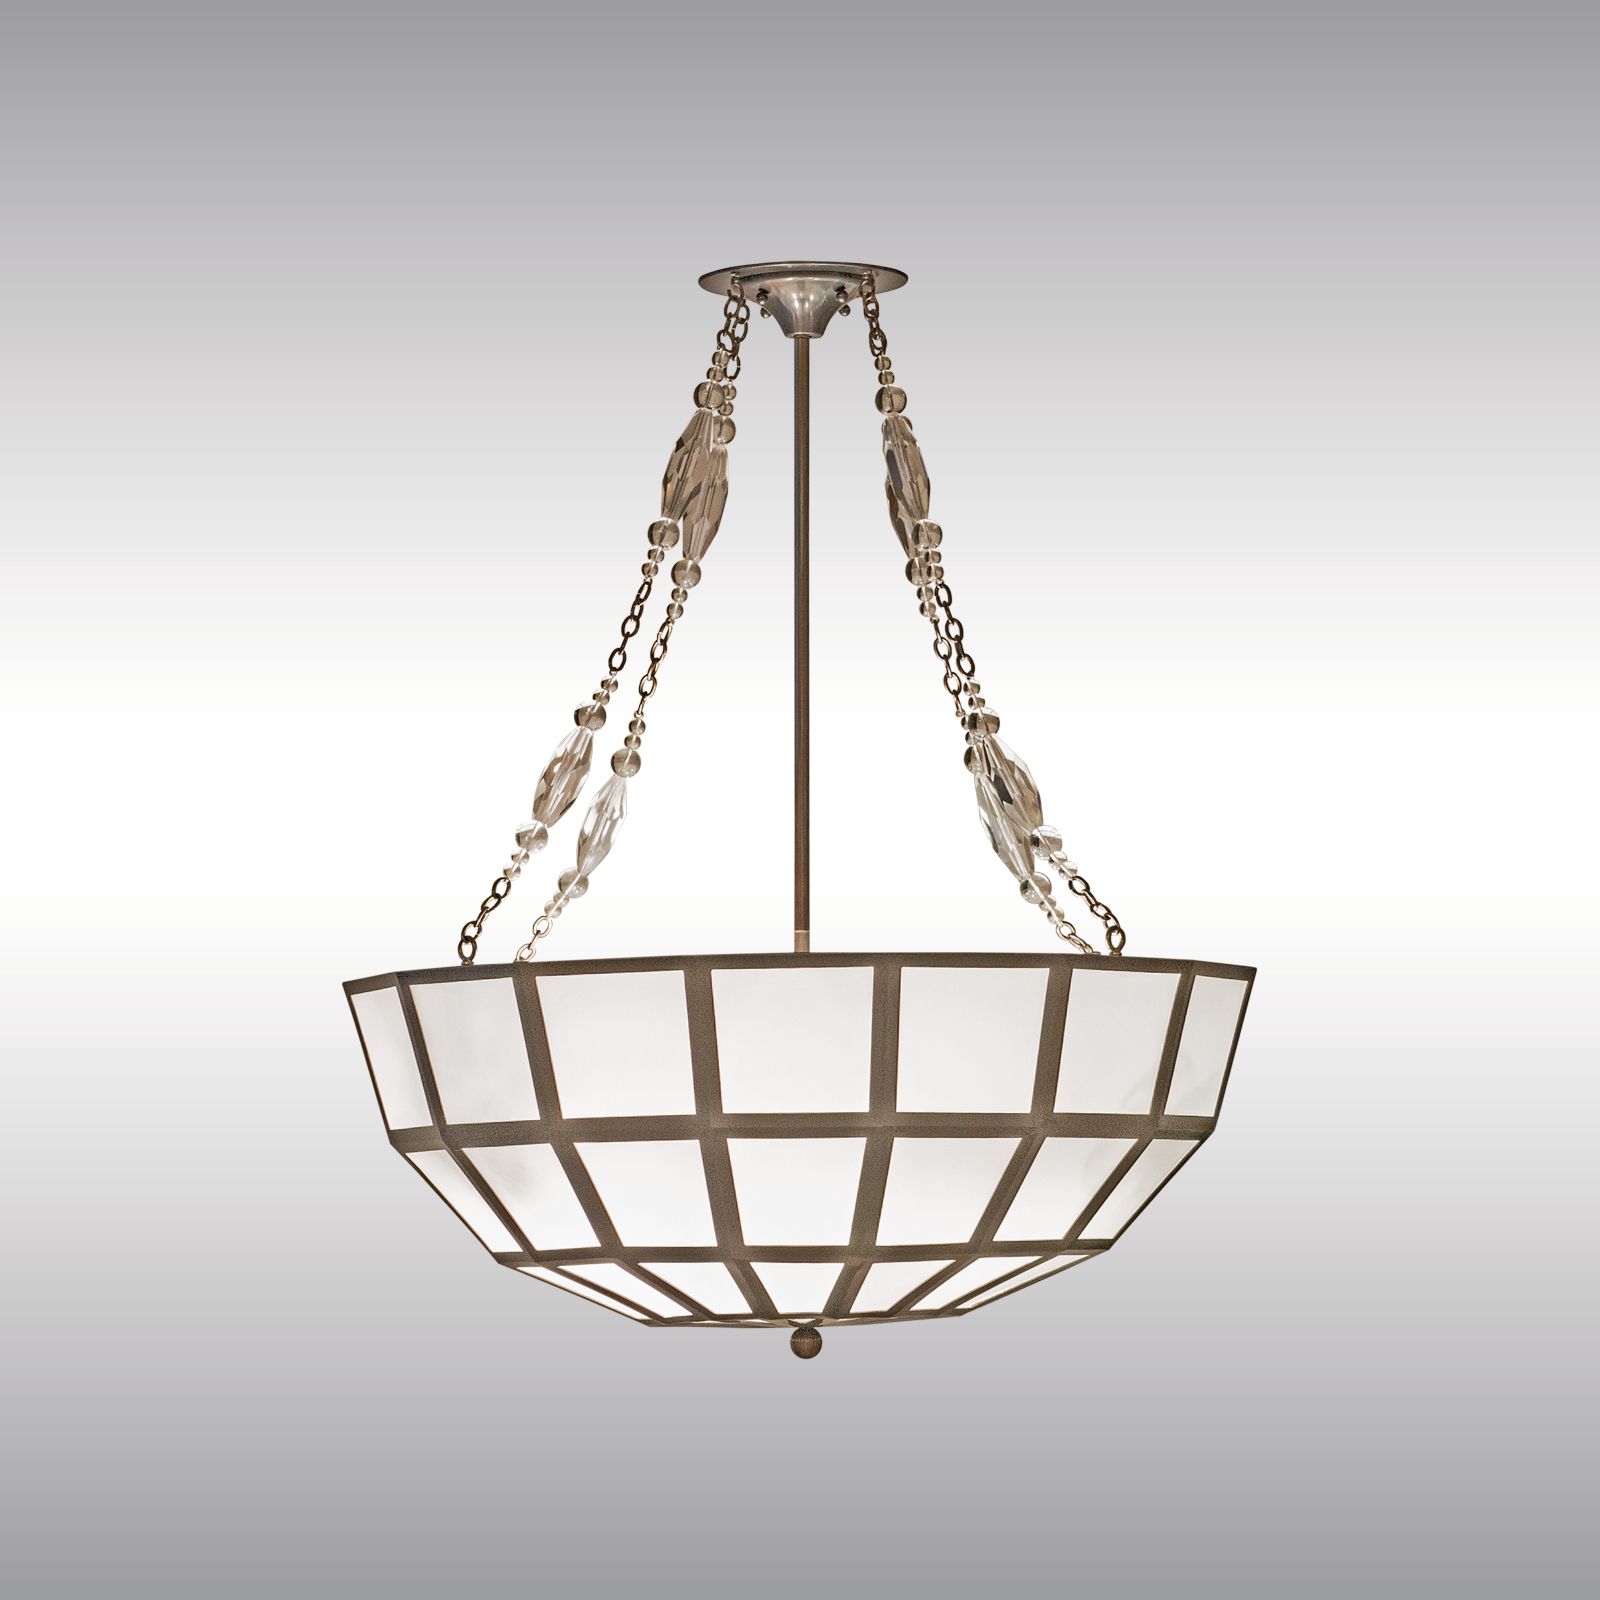 WOKA LAMPS VIENNA - OrderNr.: 21833|Adolf Loos Constructivist Chandelier - Design: Adolf Loos